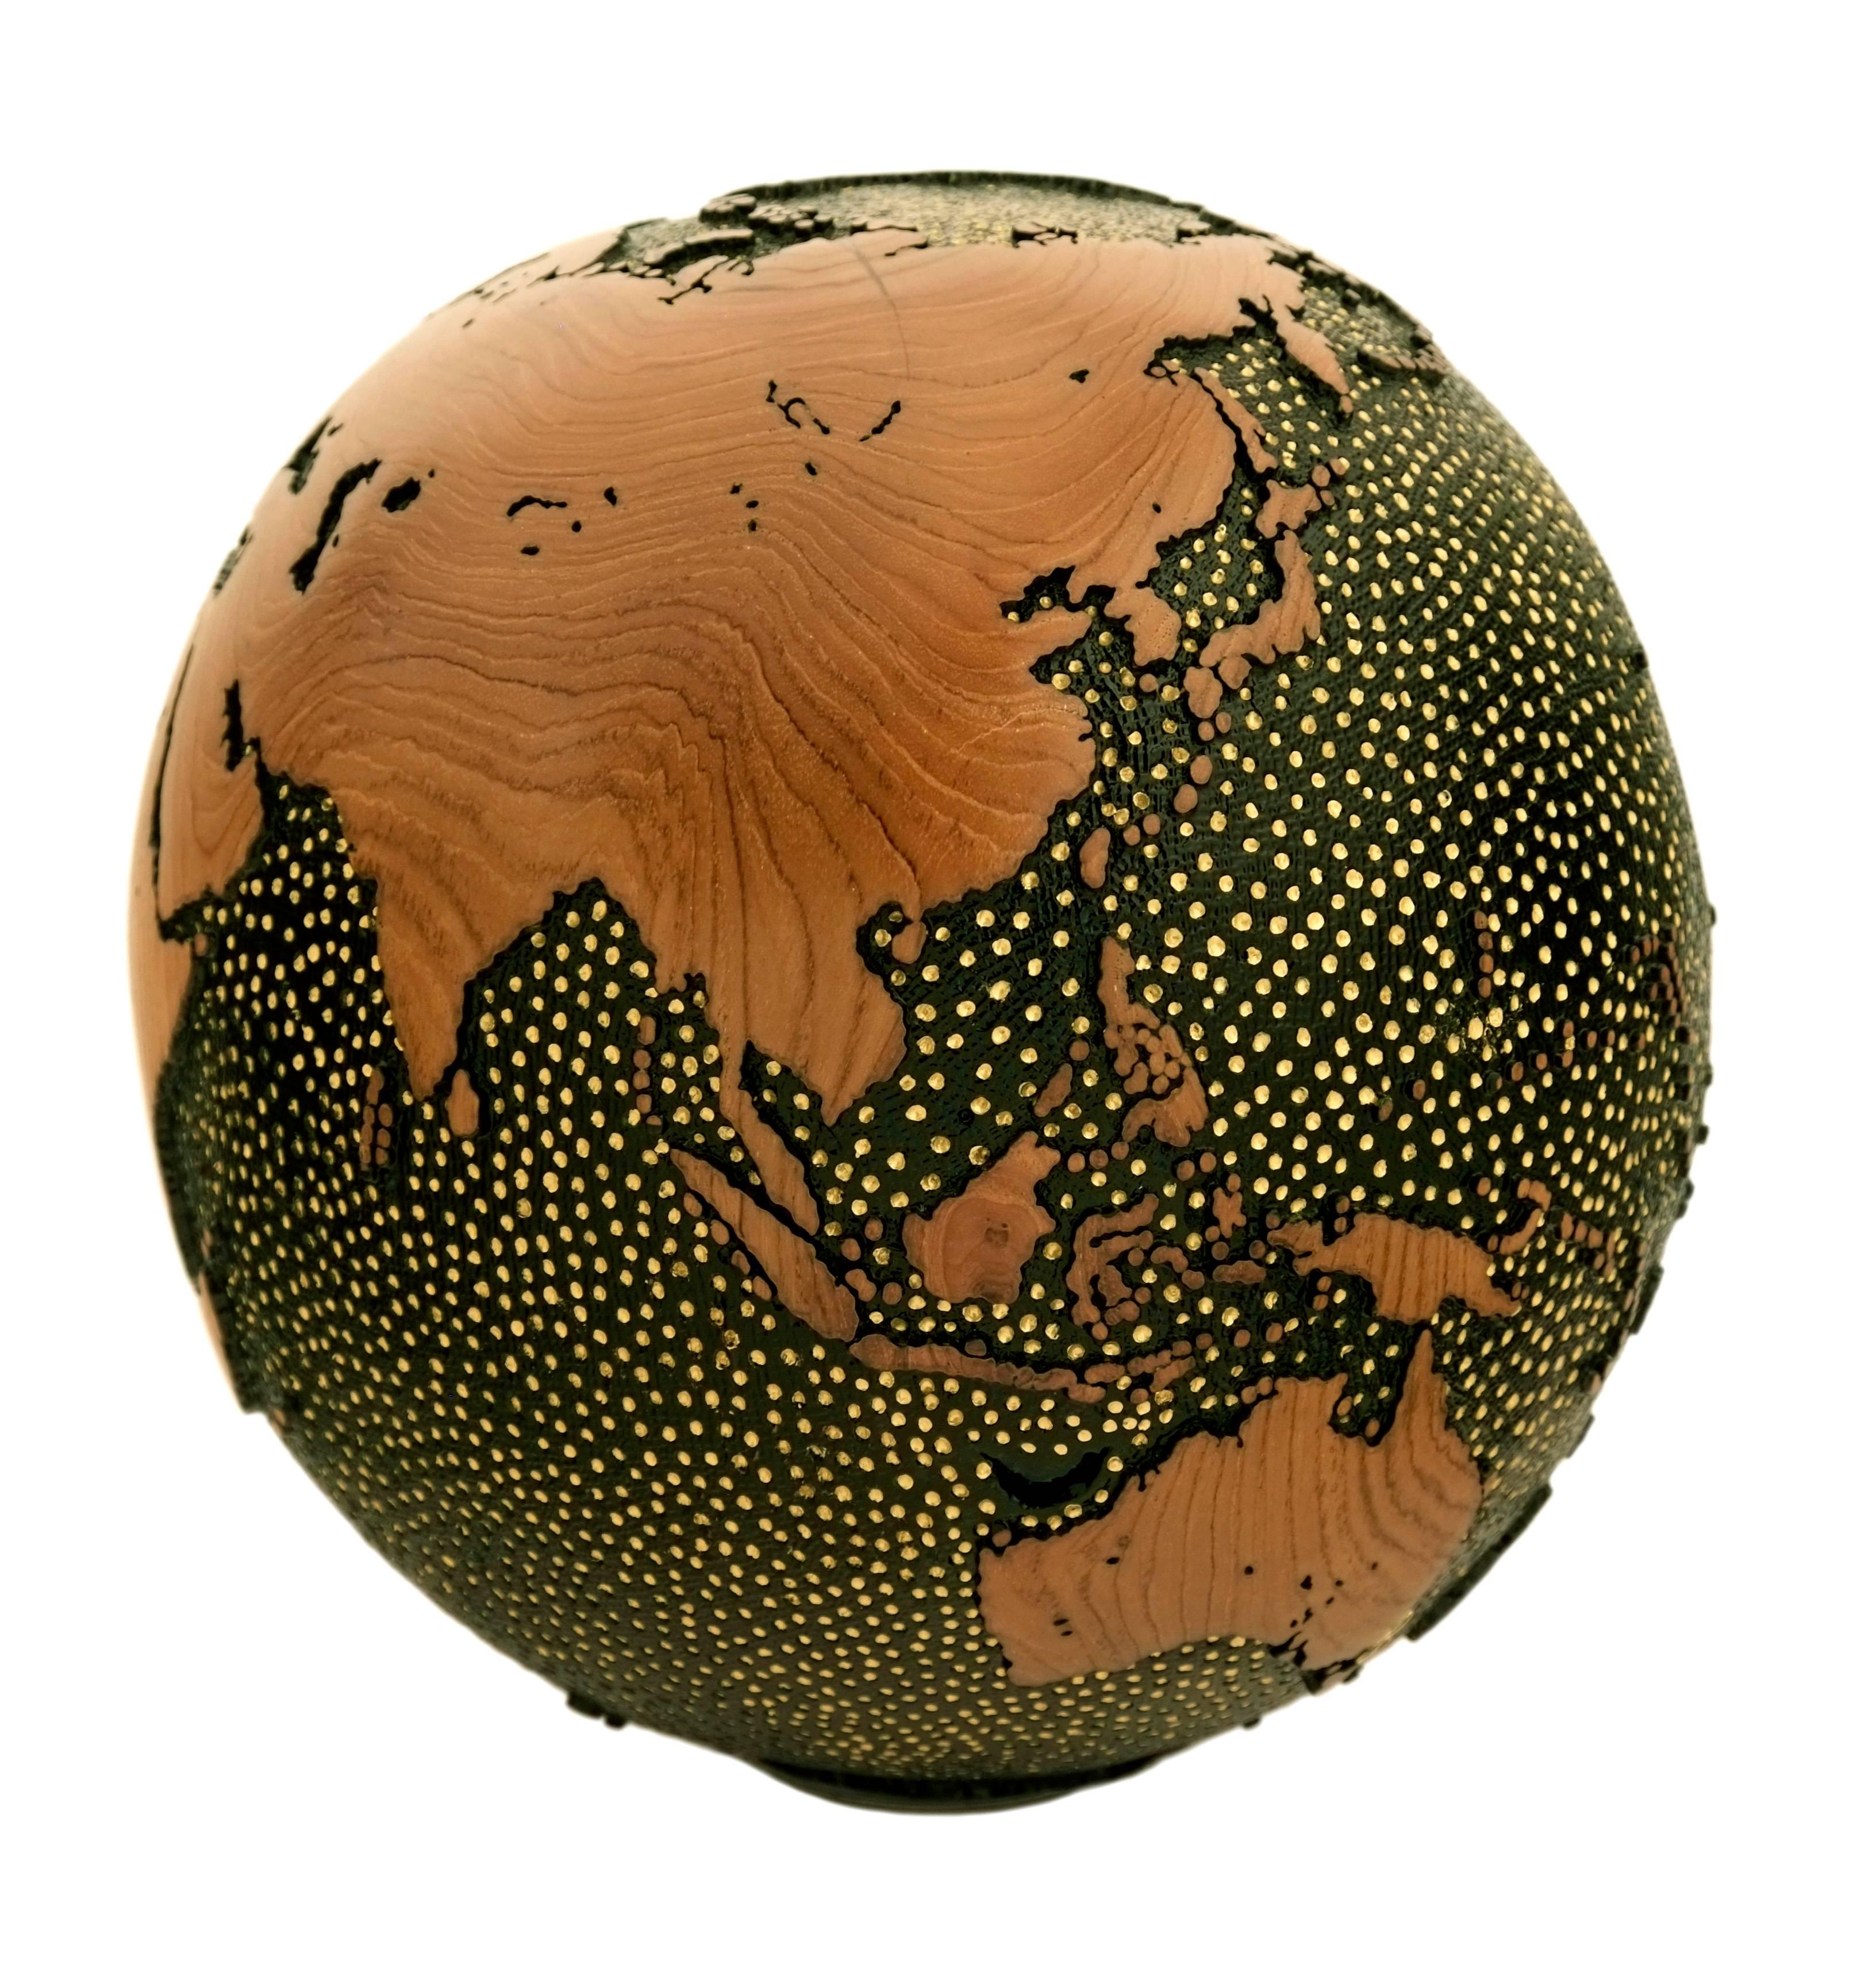 Organic Modern Earth Stars Globe, made of teak root, vitrail, gold paint, hammered texture 30cm